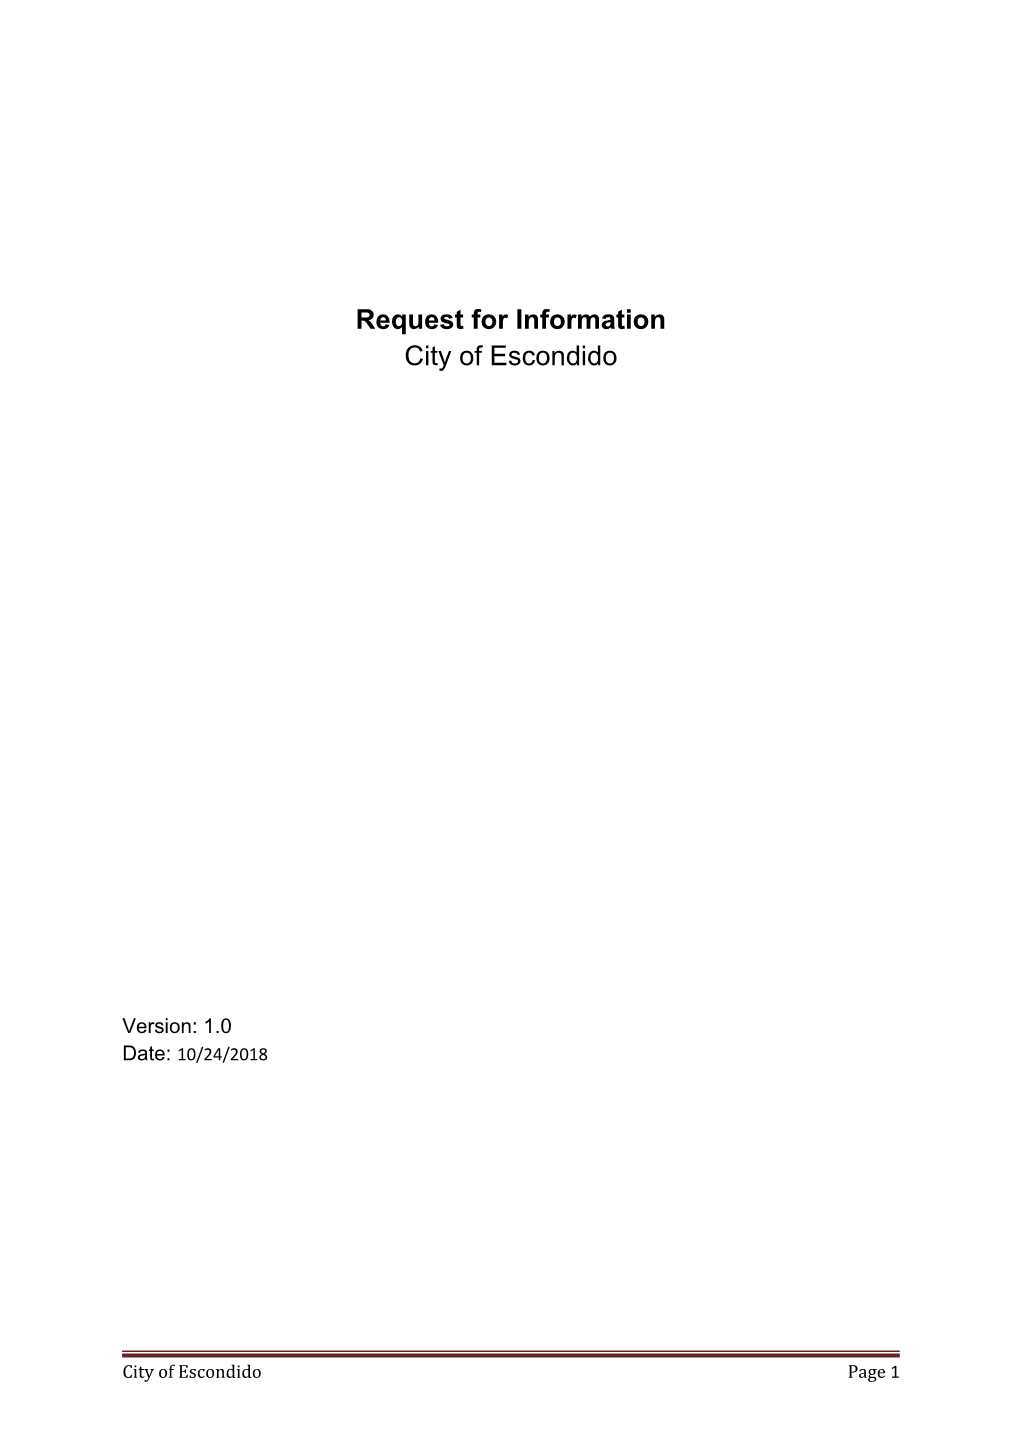 Request for Information City of Escondido